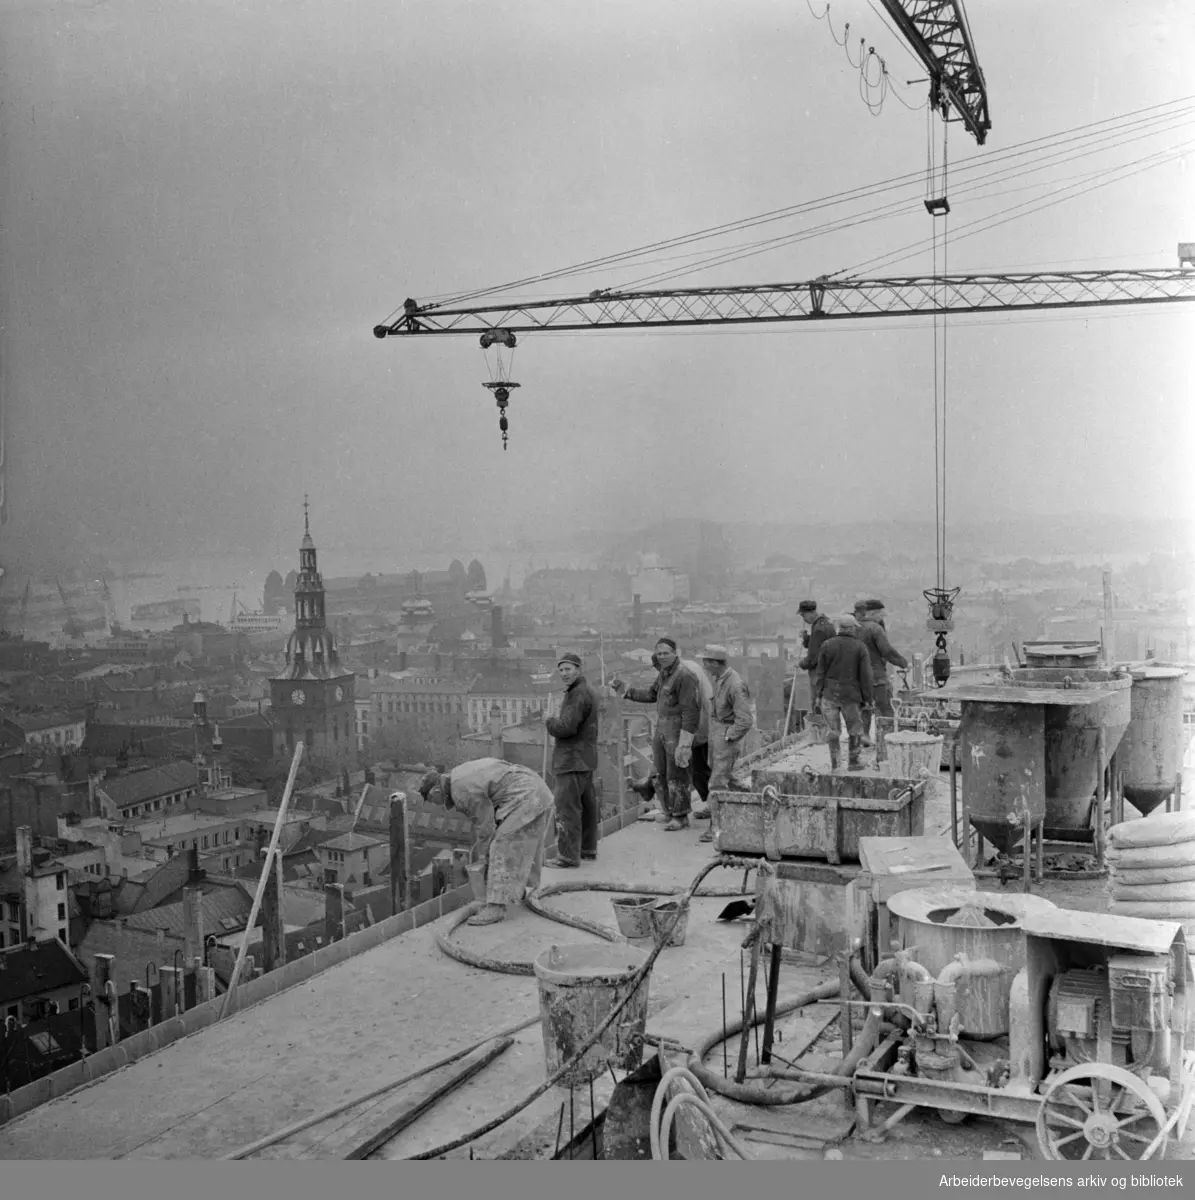 Regjeringskvartalet under bygging. Oktober 1957